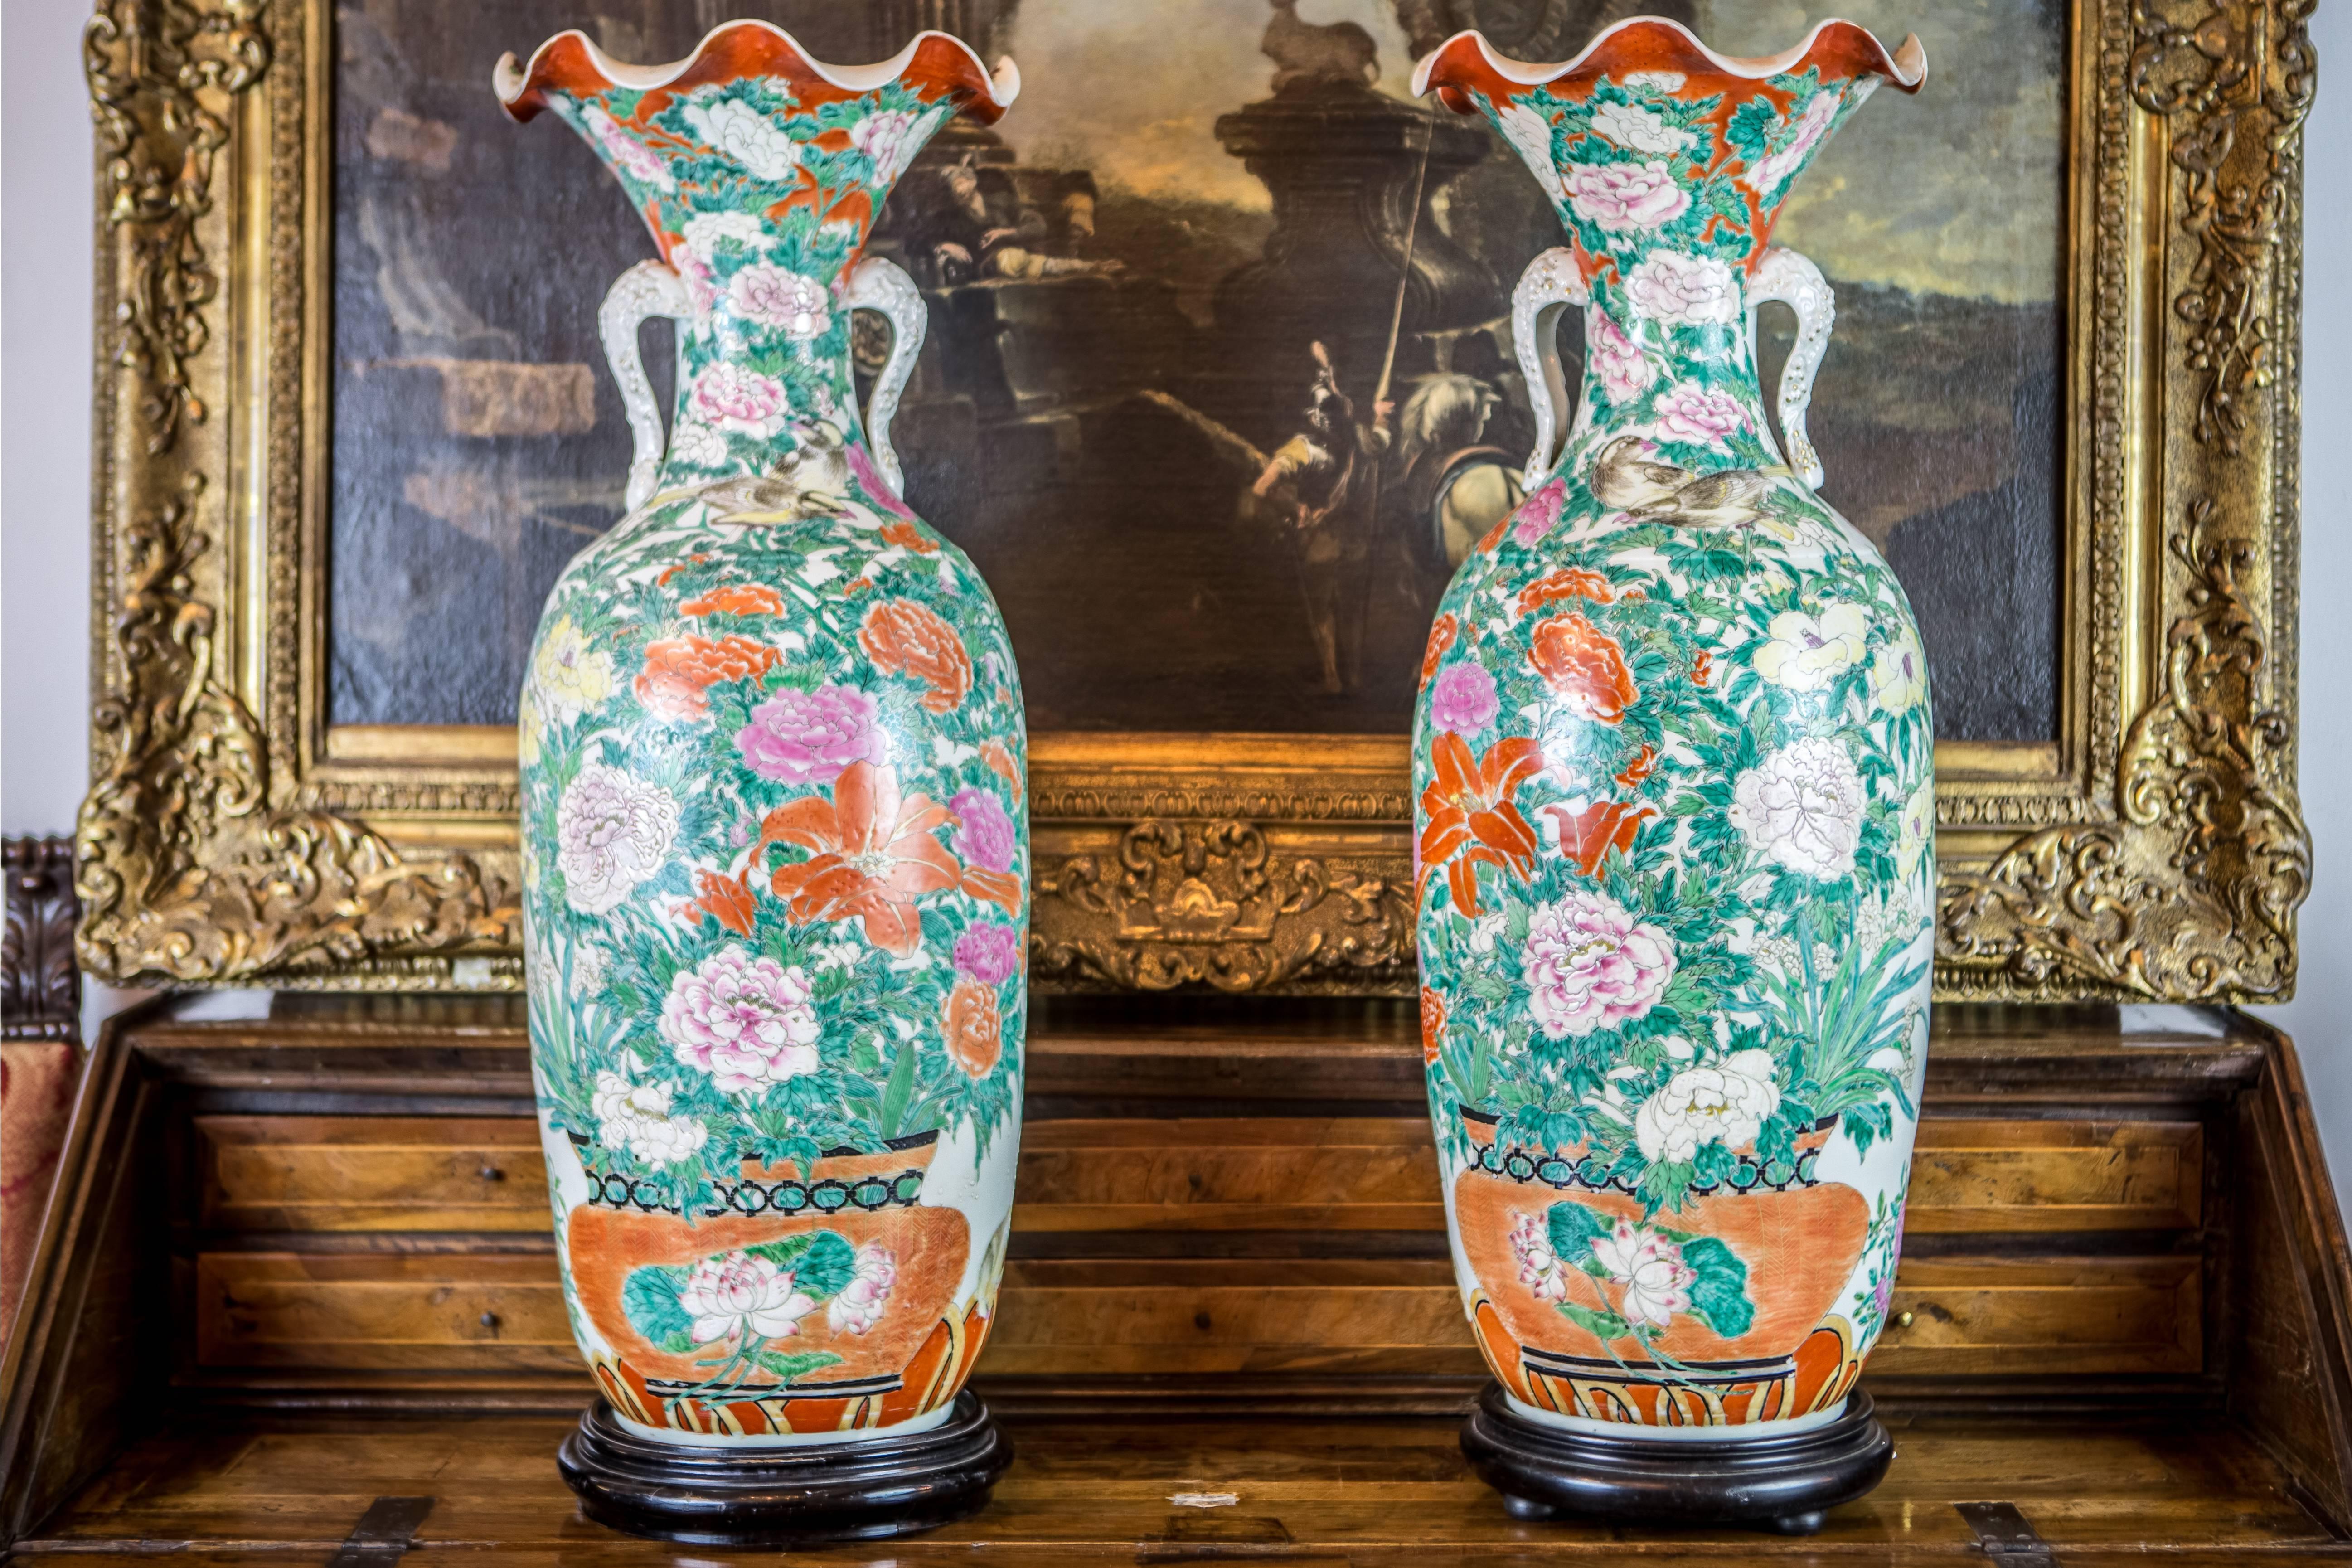 Pair of Large Japanese Porcelain Vases 19th Century Kutani Style (Japonismus)